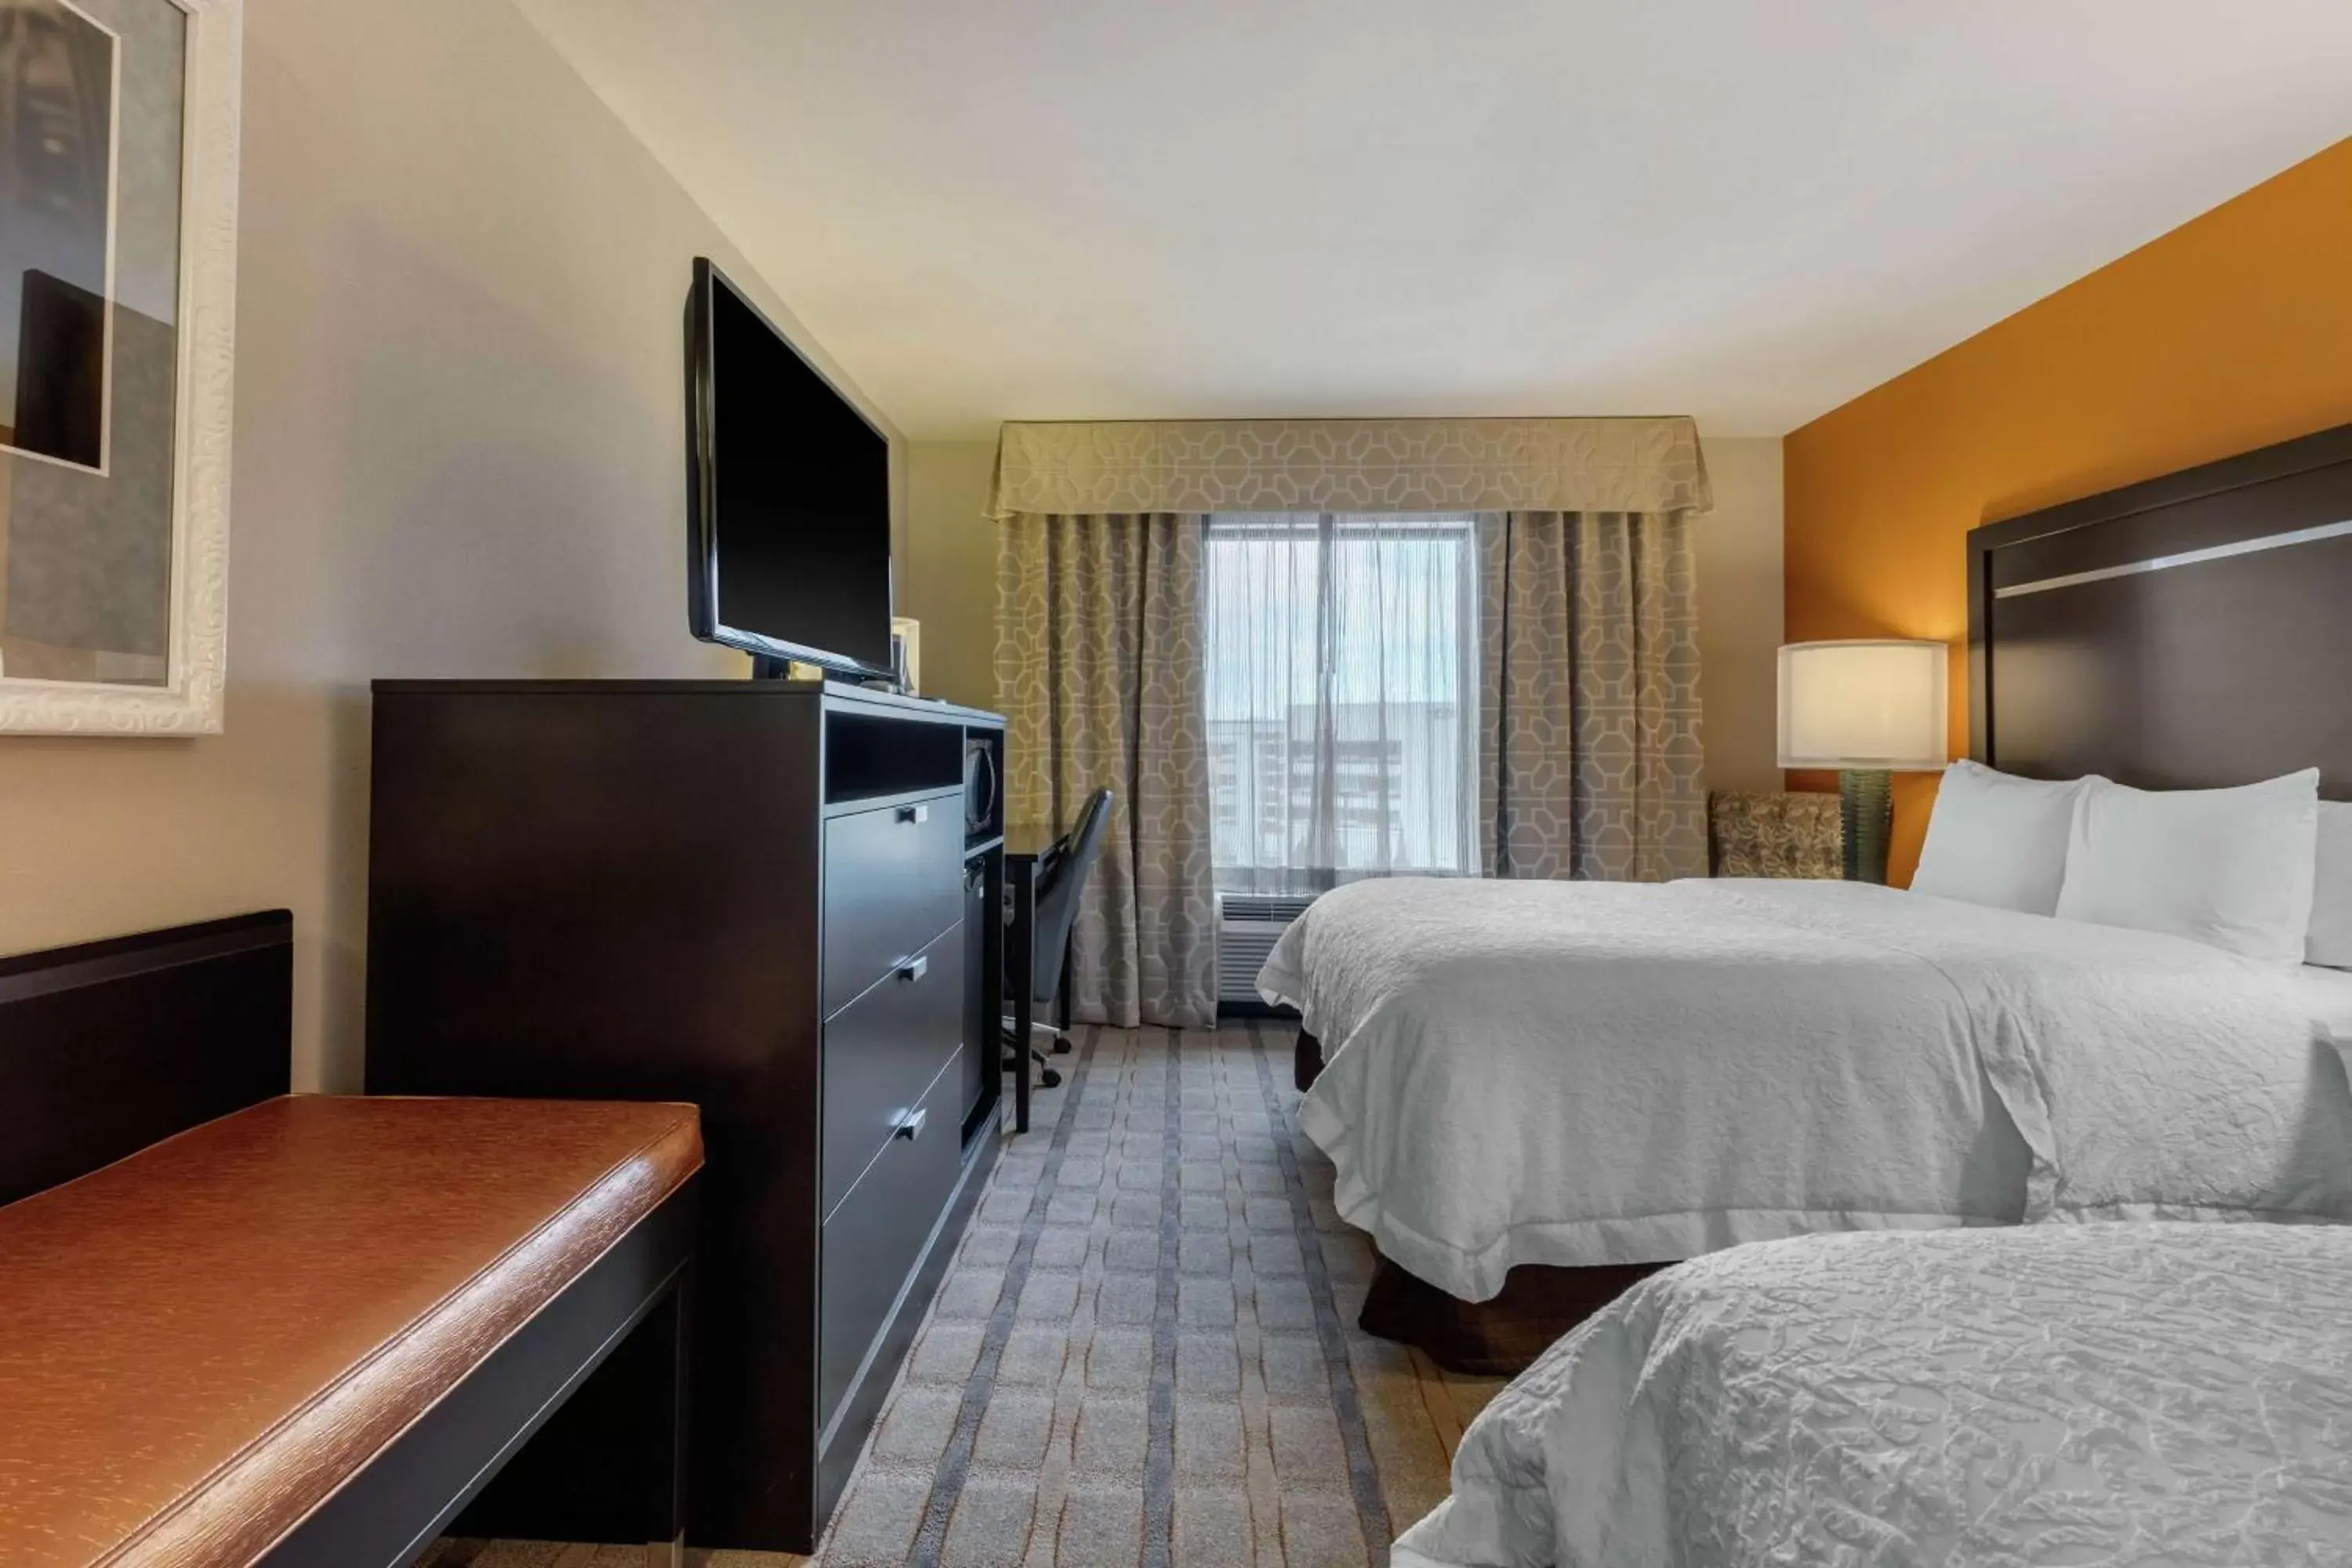 Bedroom, TV/Entertainment Center in Hampton Inn and Suites Columbus, MS